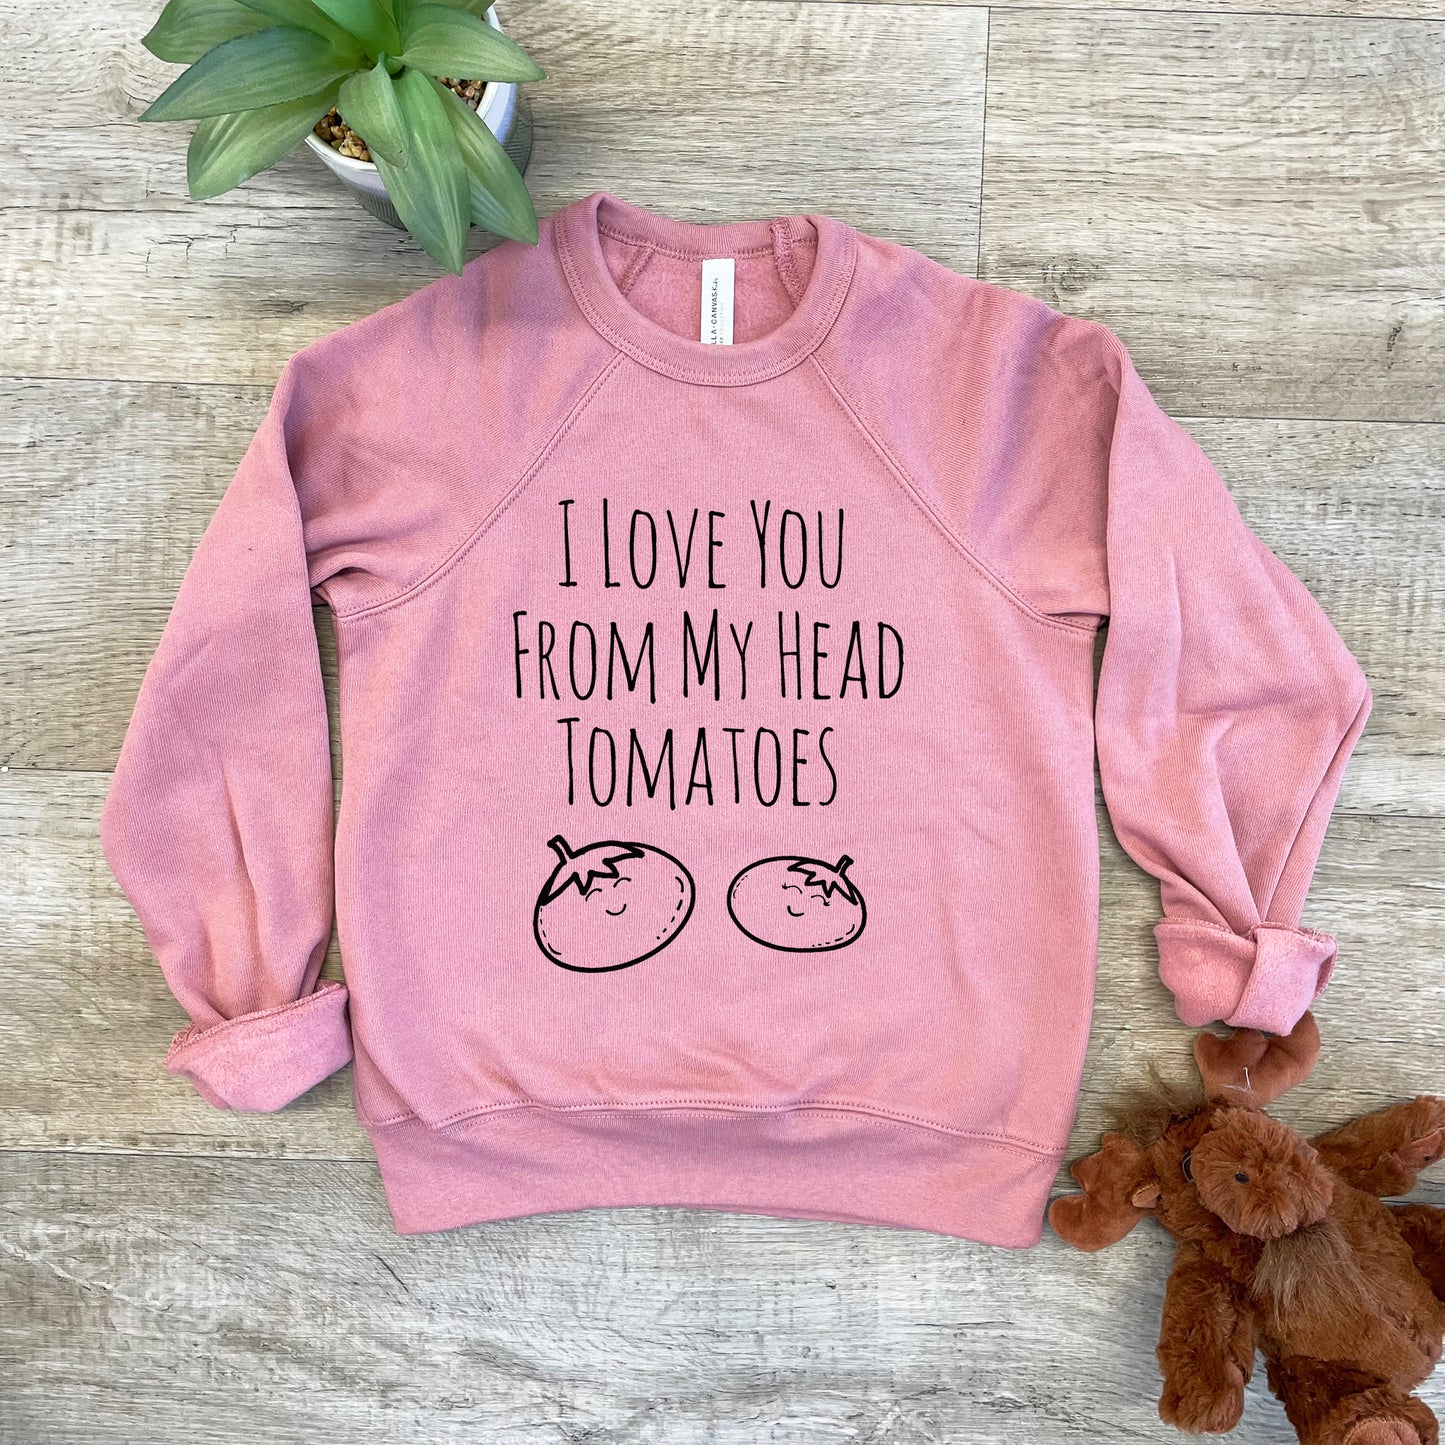 I Love You From My Head Tomatoes - Kid's Sweatshirt - Heather Gray or Mauve